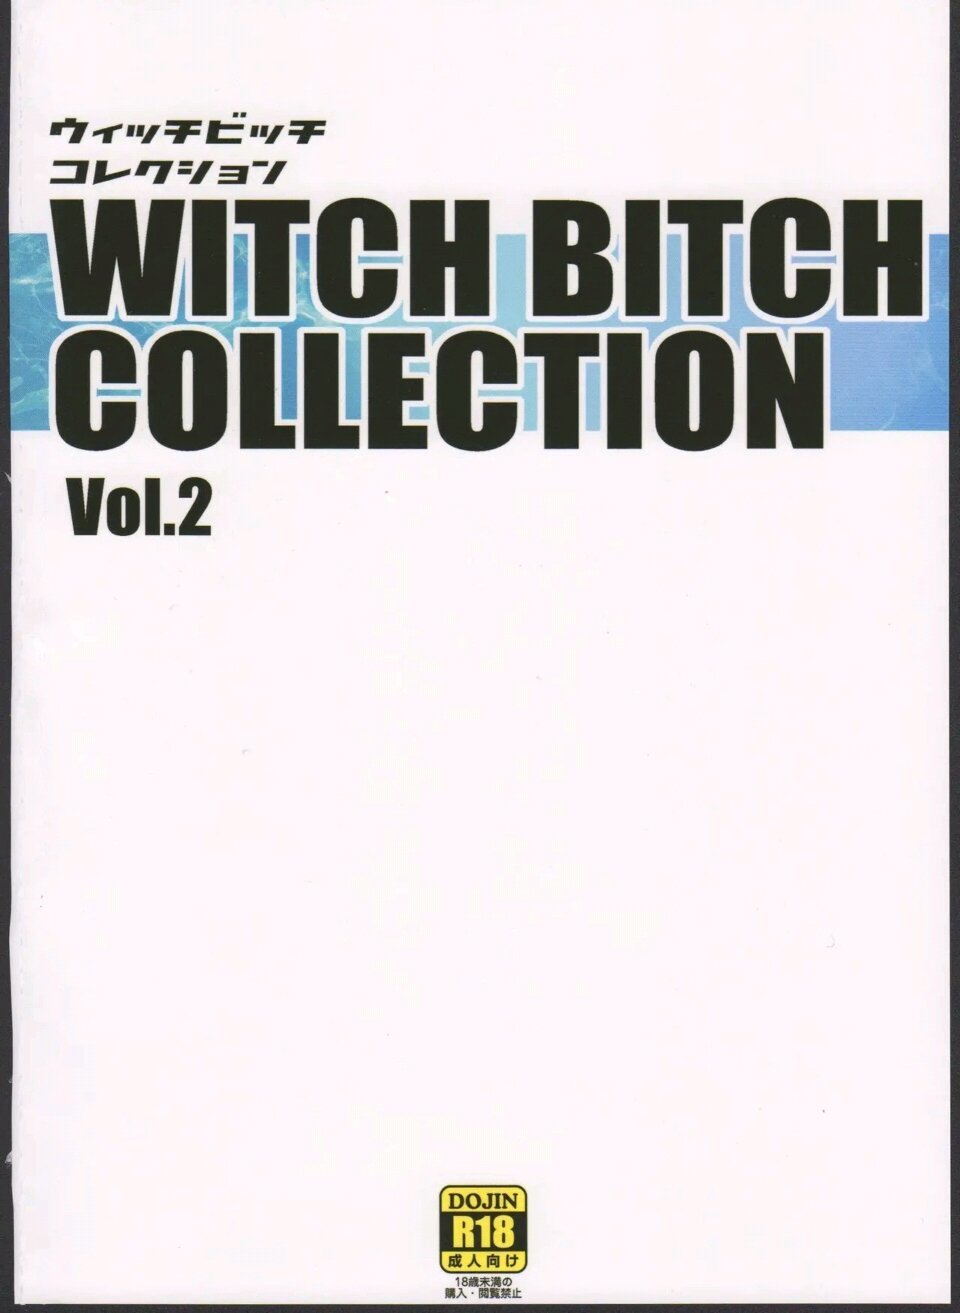 (Color) Chichikko Bitch 3 Witch Bitch Collection Vol2 version - 23